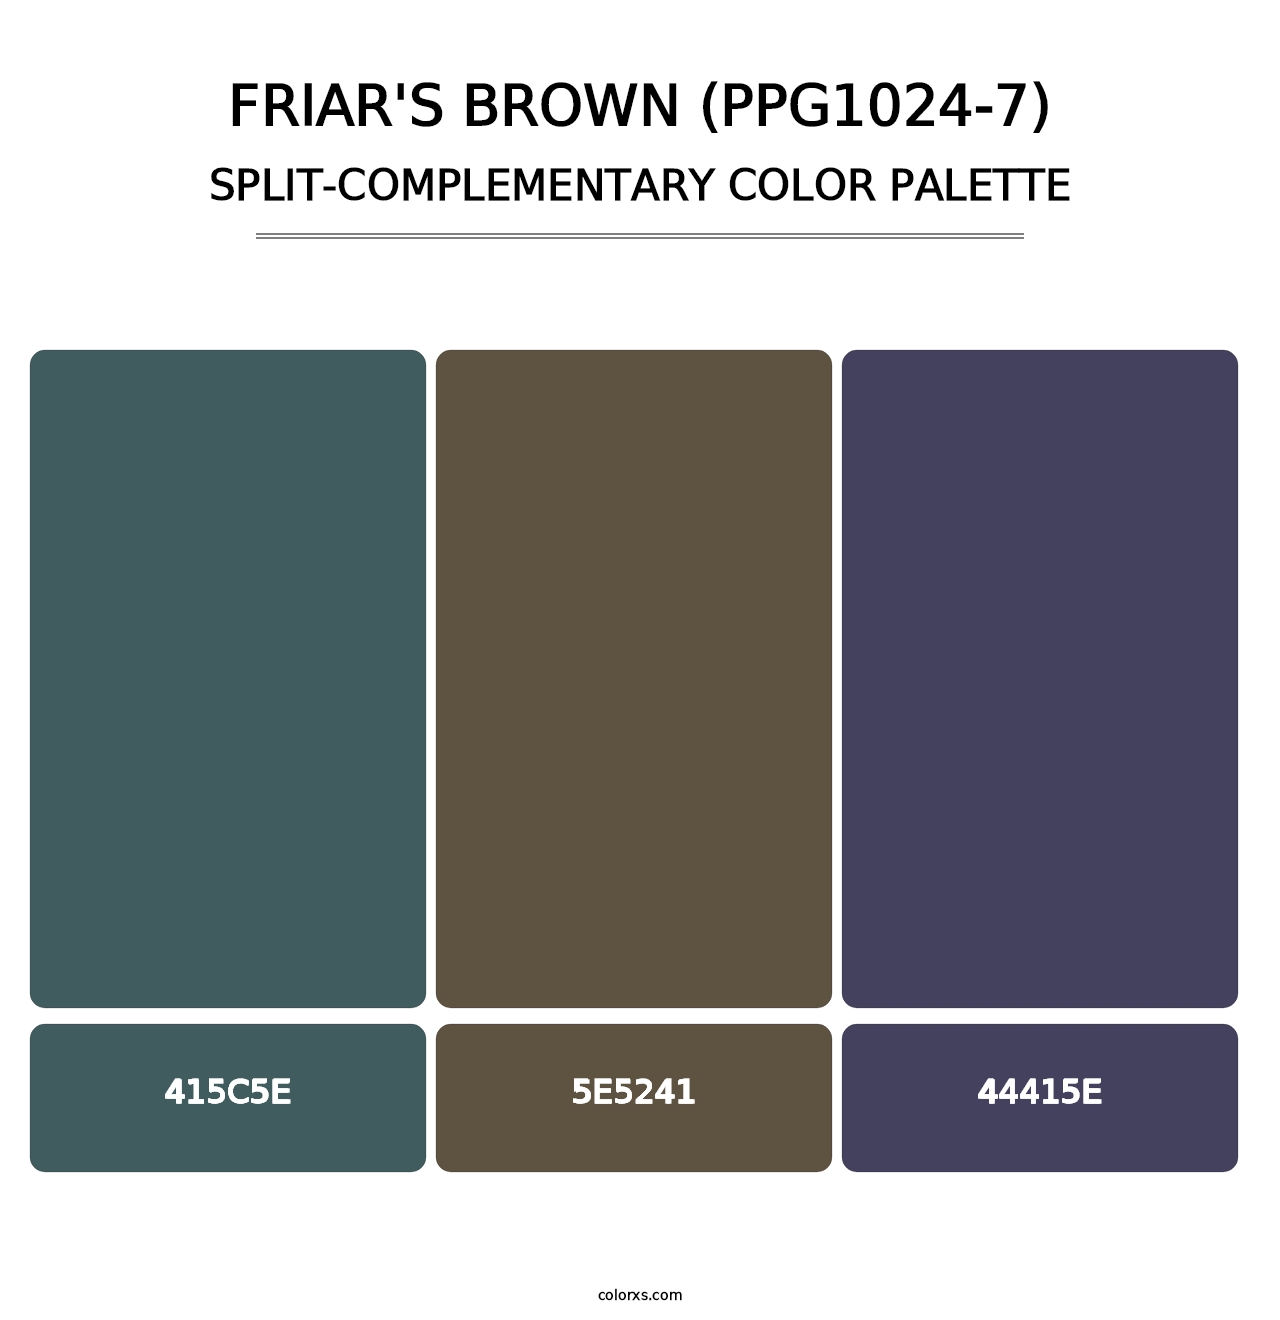 Friar's Brown (PPG1024-7) - Split-Complementary Color Palette